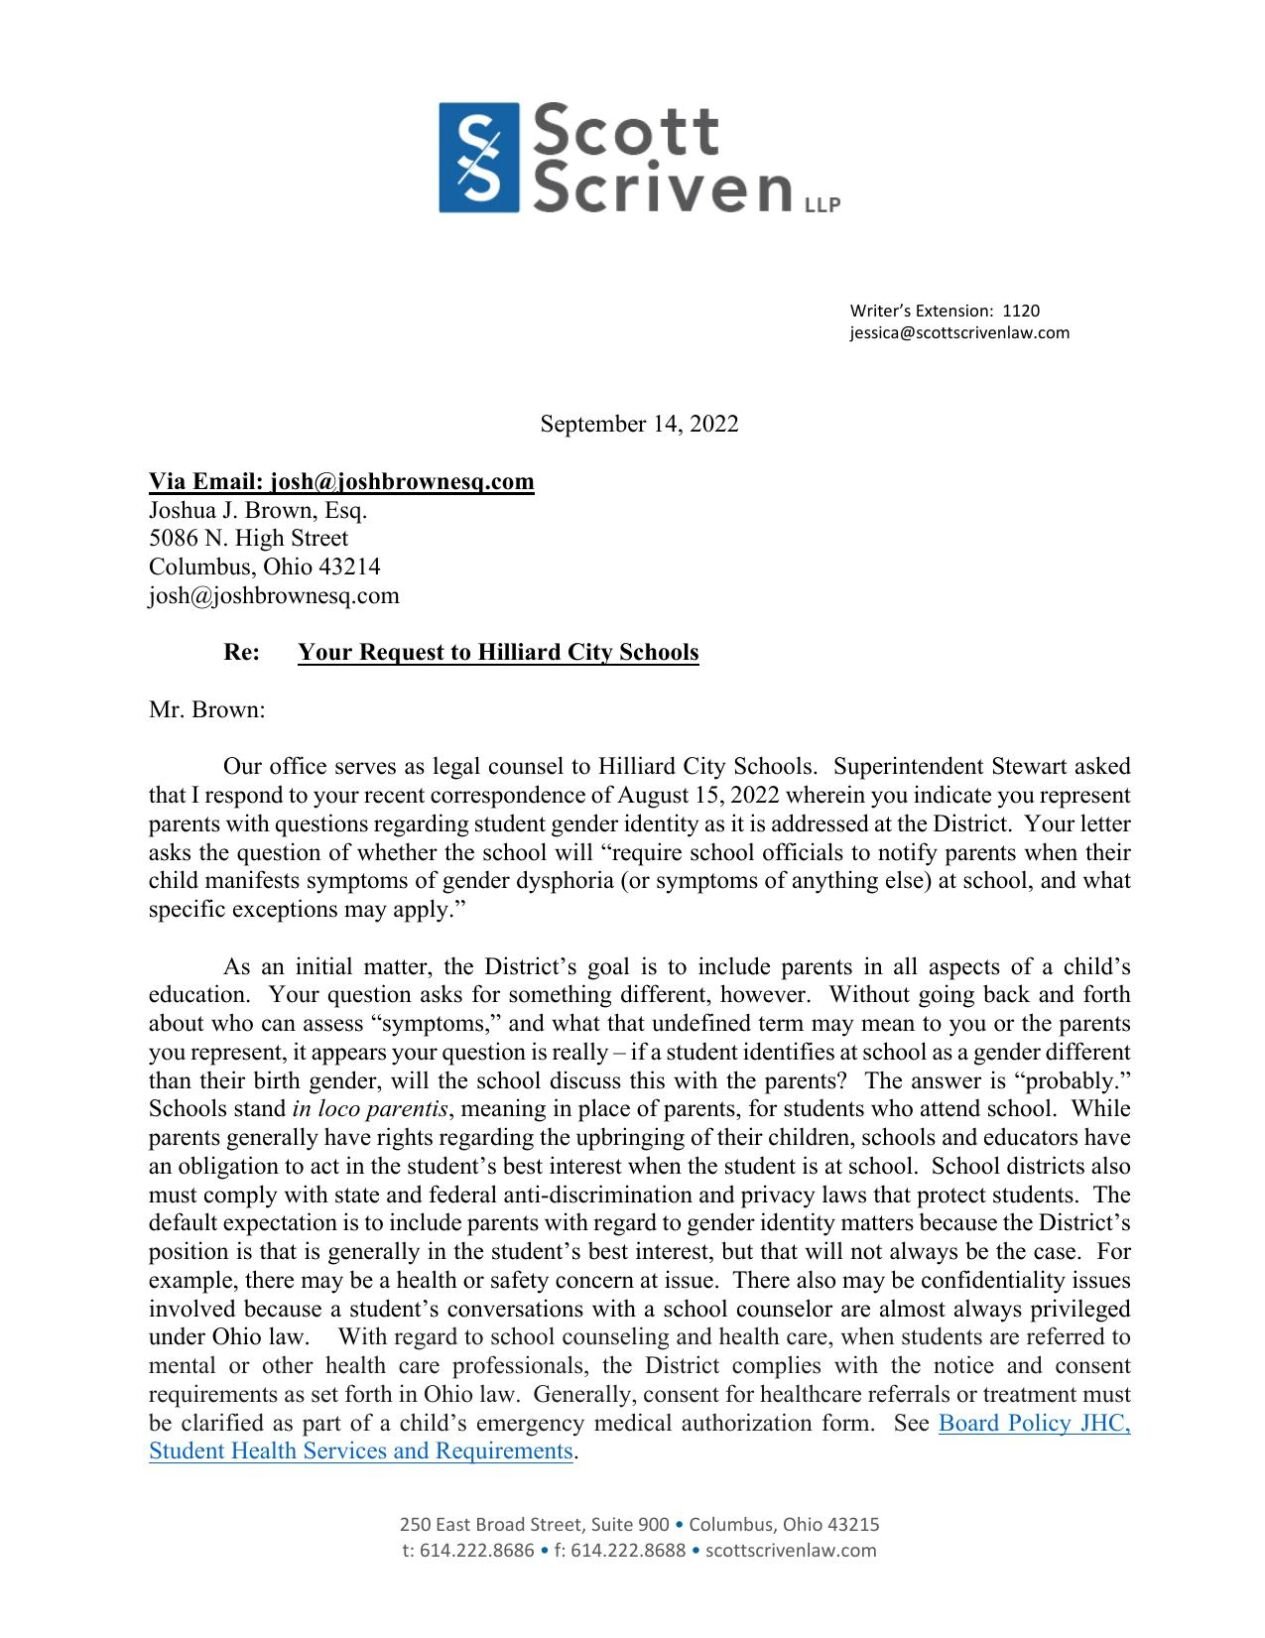 Hilliard City Schools legal response to parents' attorney Joshua Brown